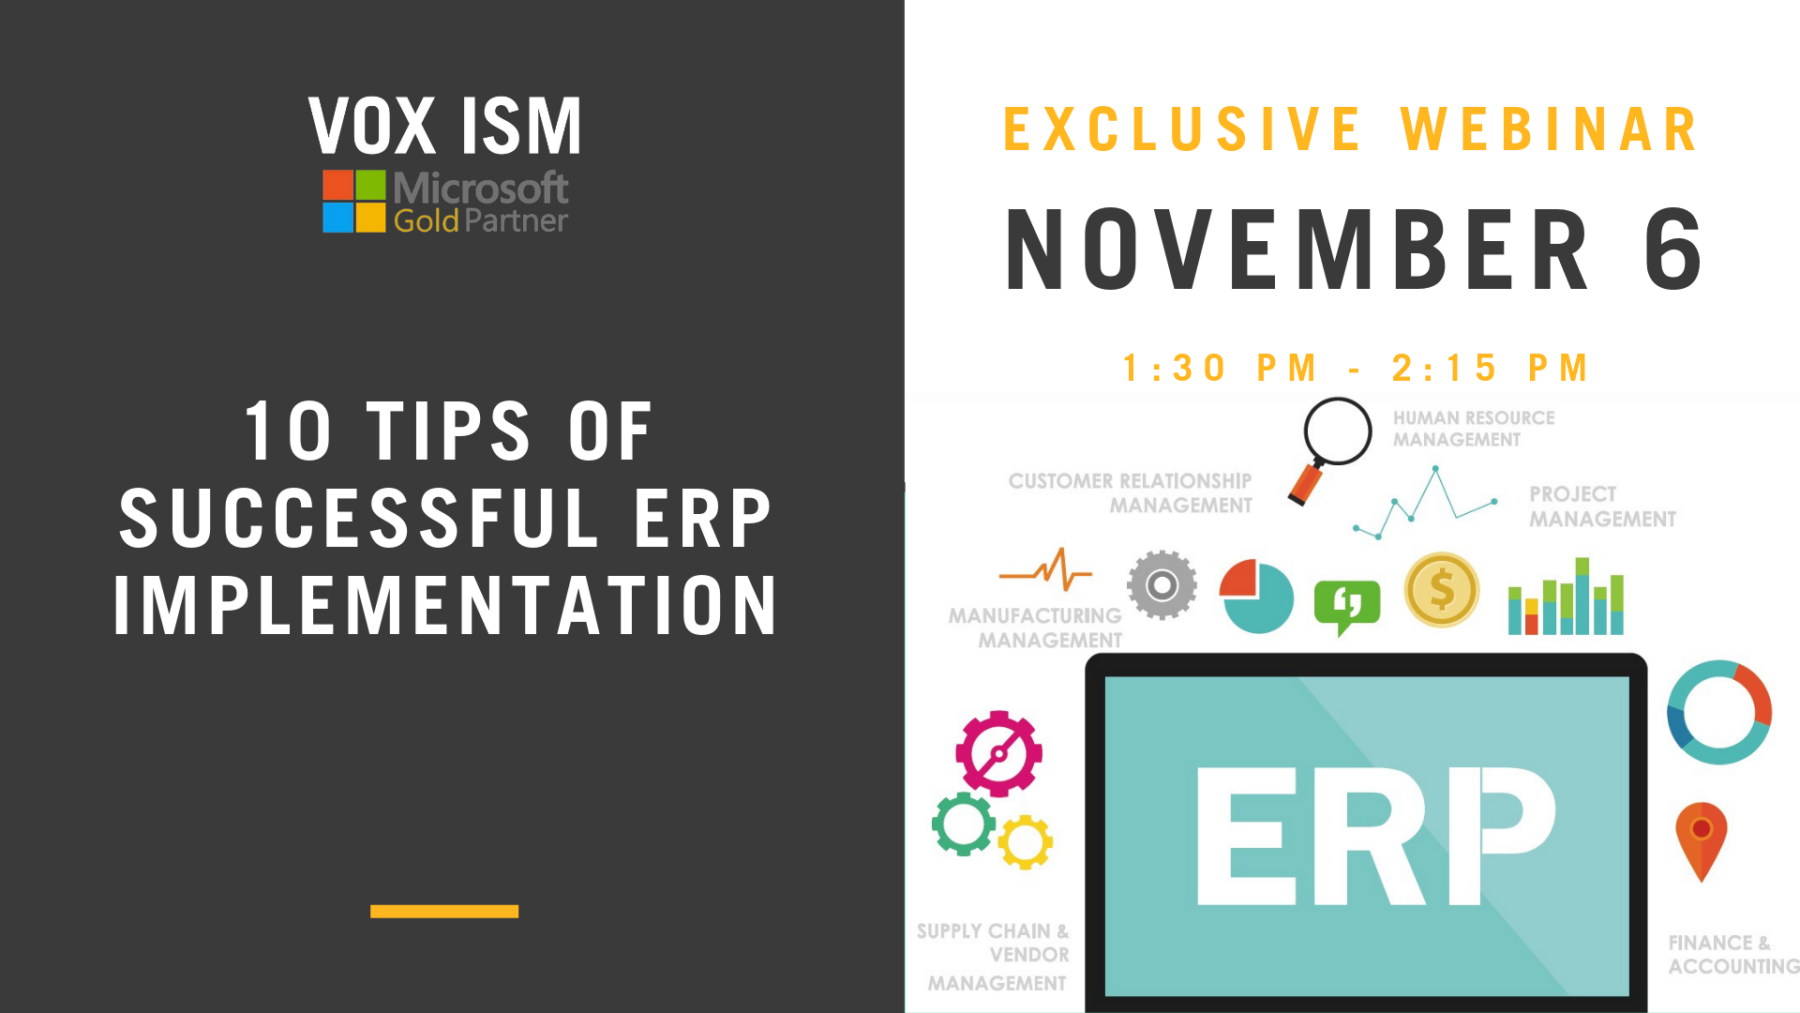 10 Tips of Successful ERP Implementation - November 6 - Webinar - VOX ISM